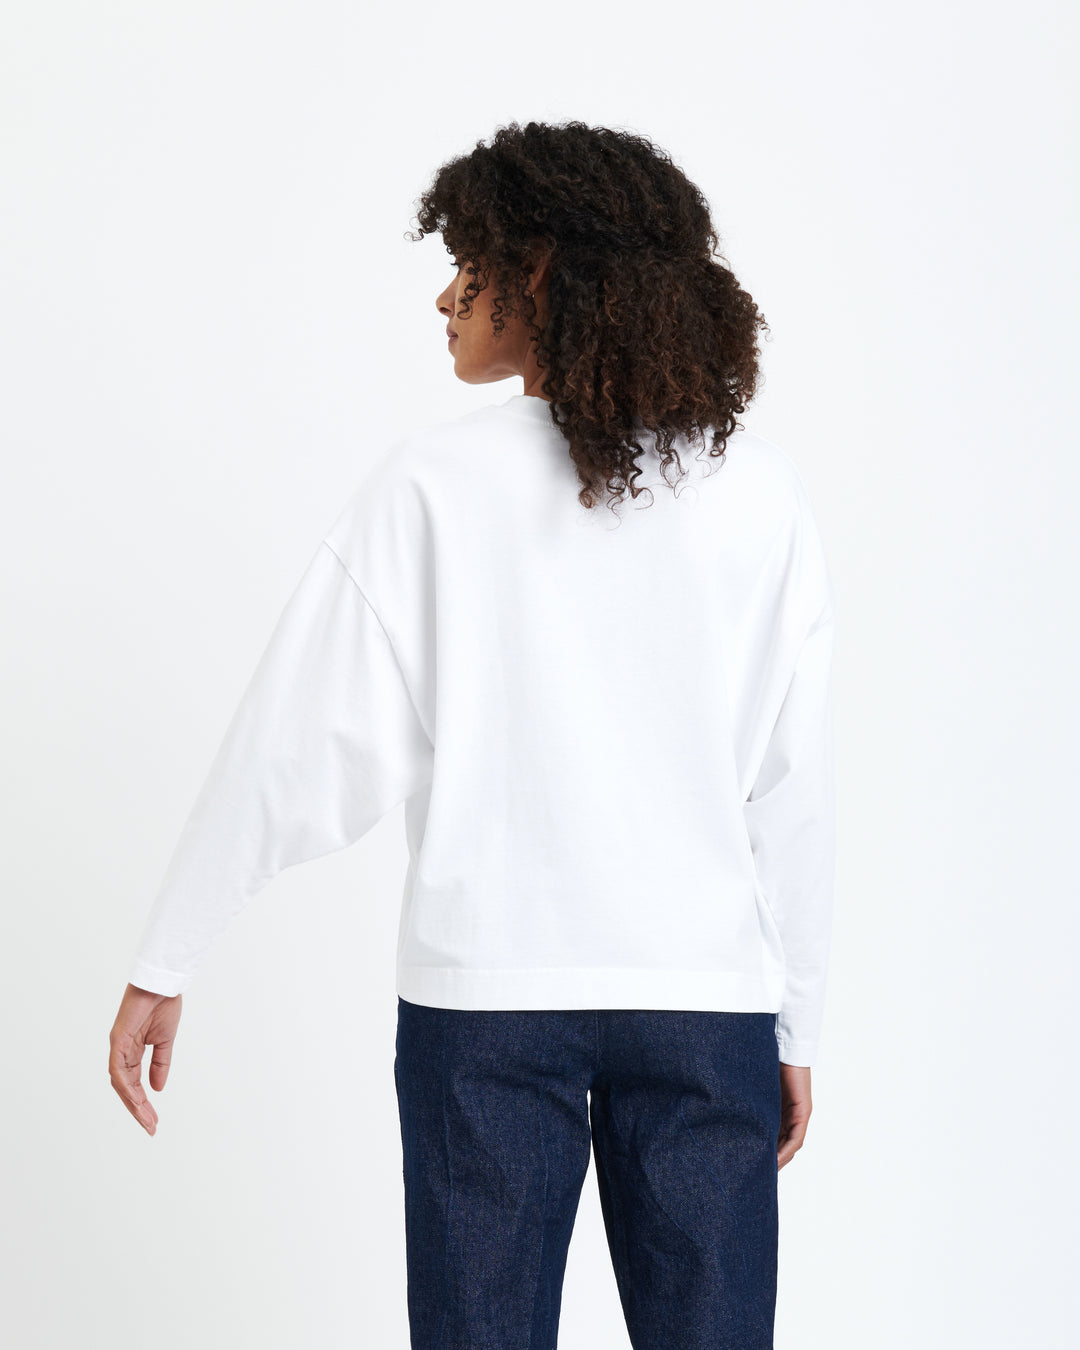 New Optimist womenswear Pianura | Sculpt silhouette T-shirt Longsleeve